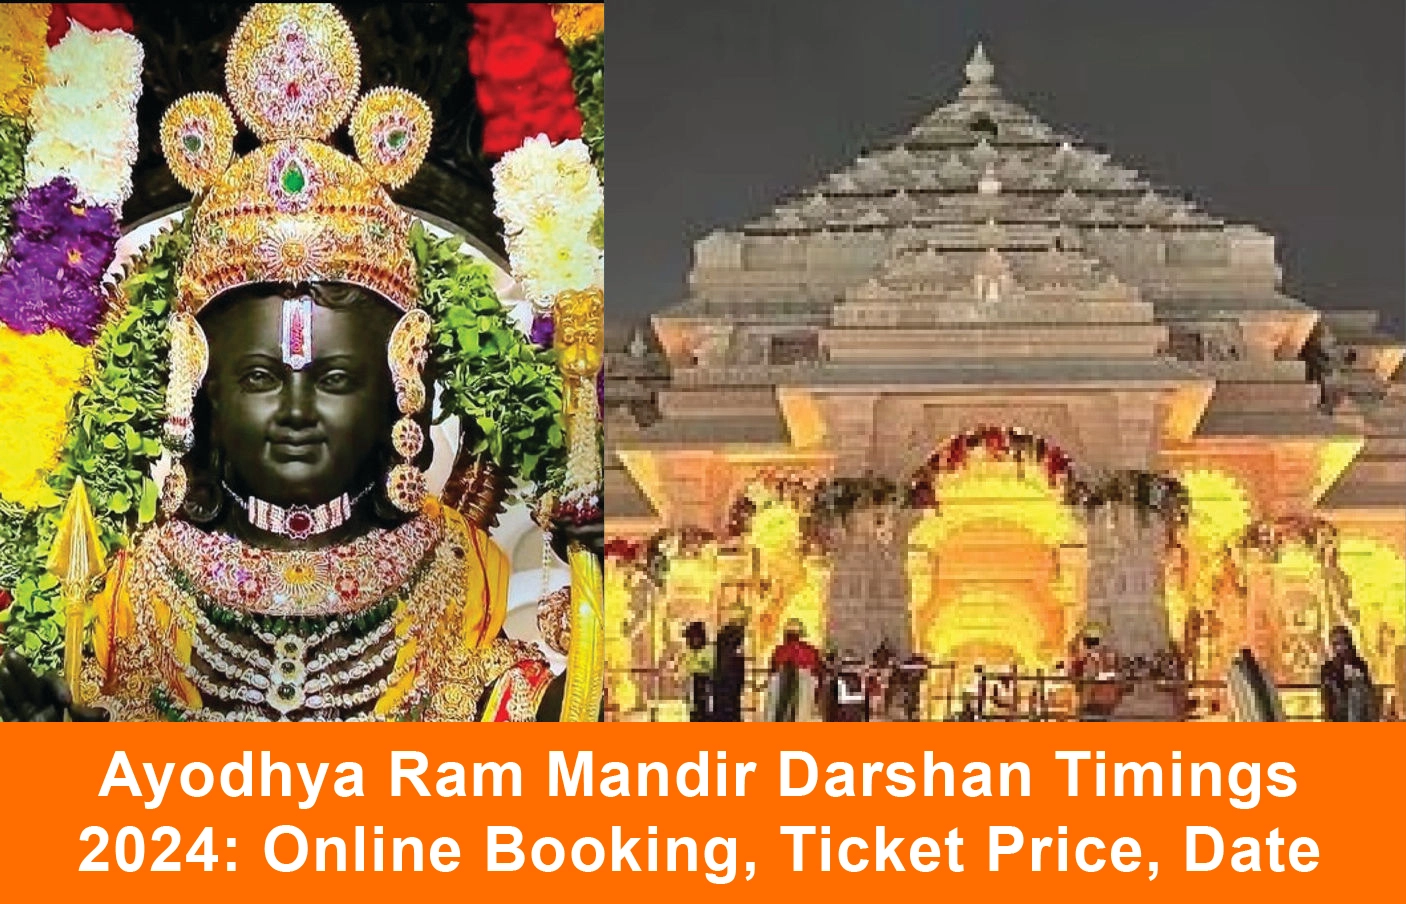 Ayodhya Ram Mandir Darshan Timing